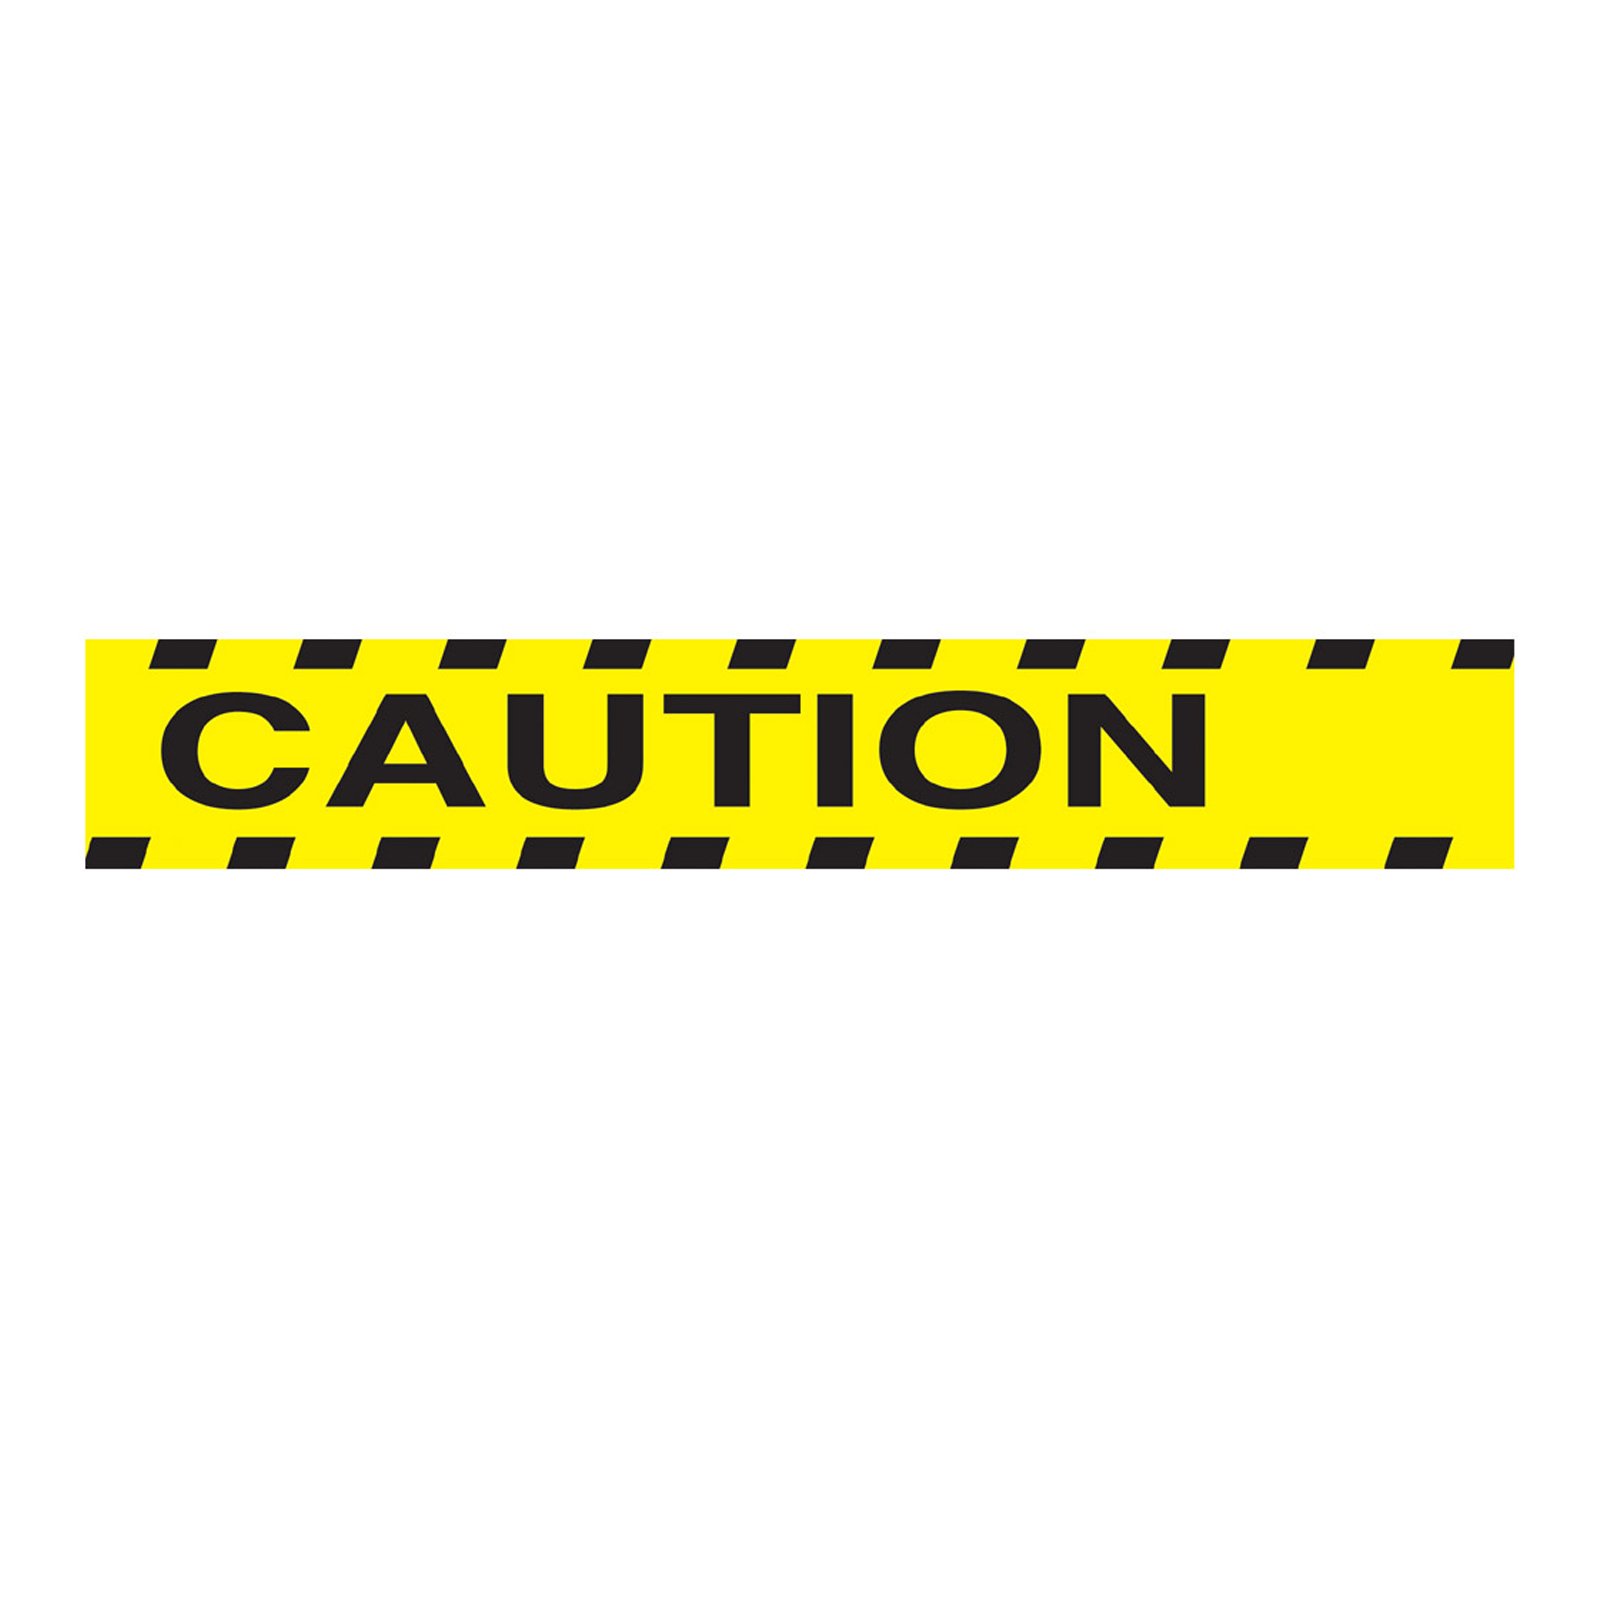 caution tape - DriverLayer Search Engine